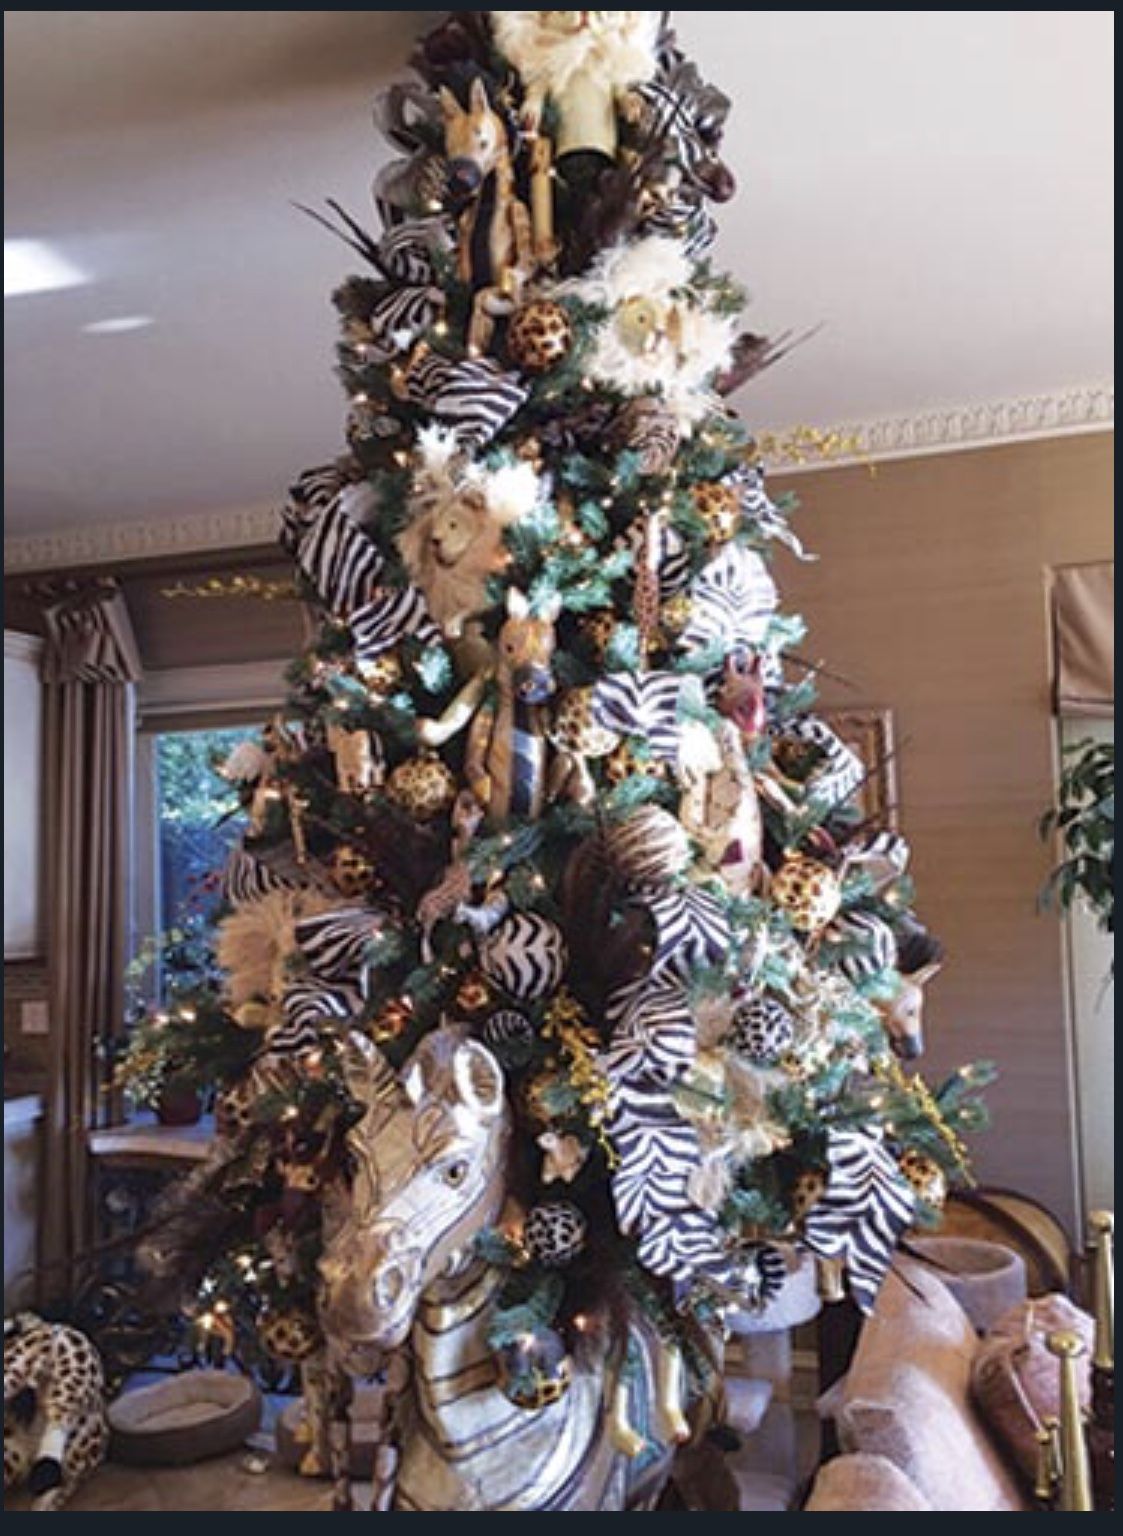 Themed Christmas Trees